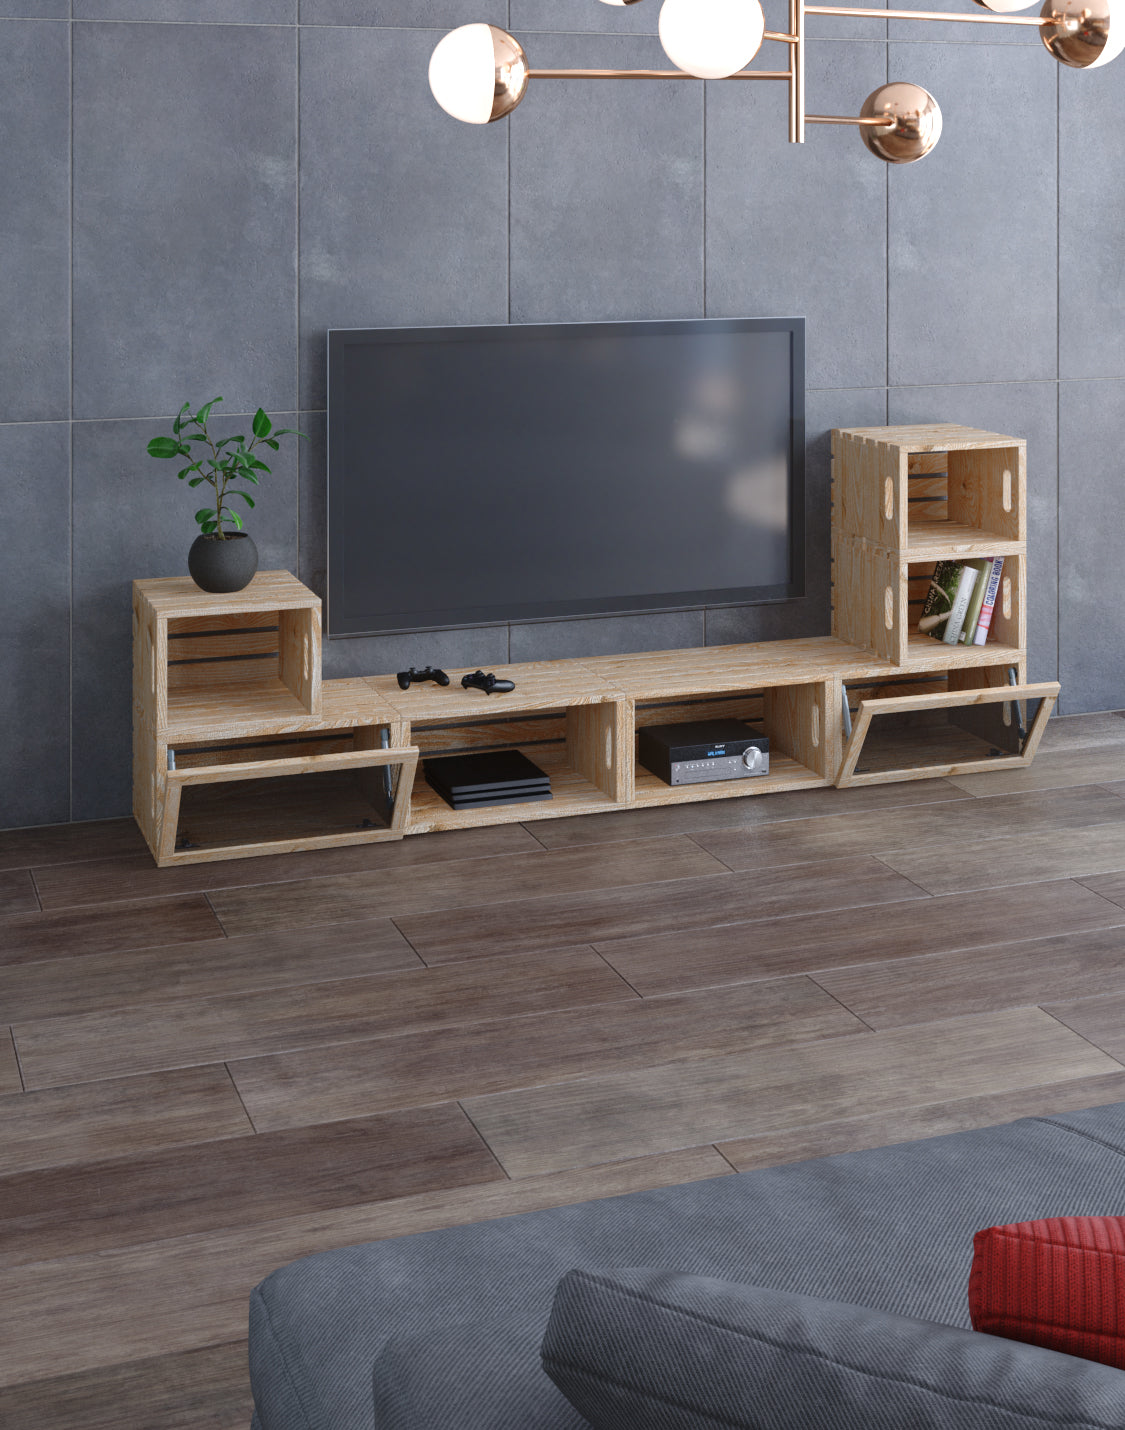 Tunnard TV Unit Modular And real wood furniture product